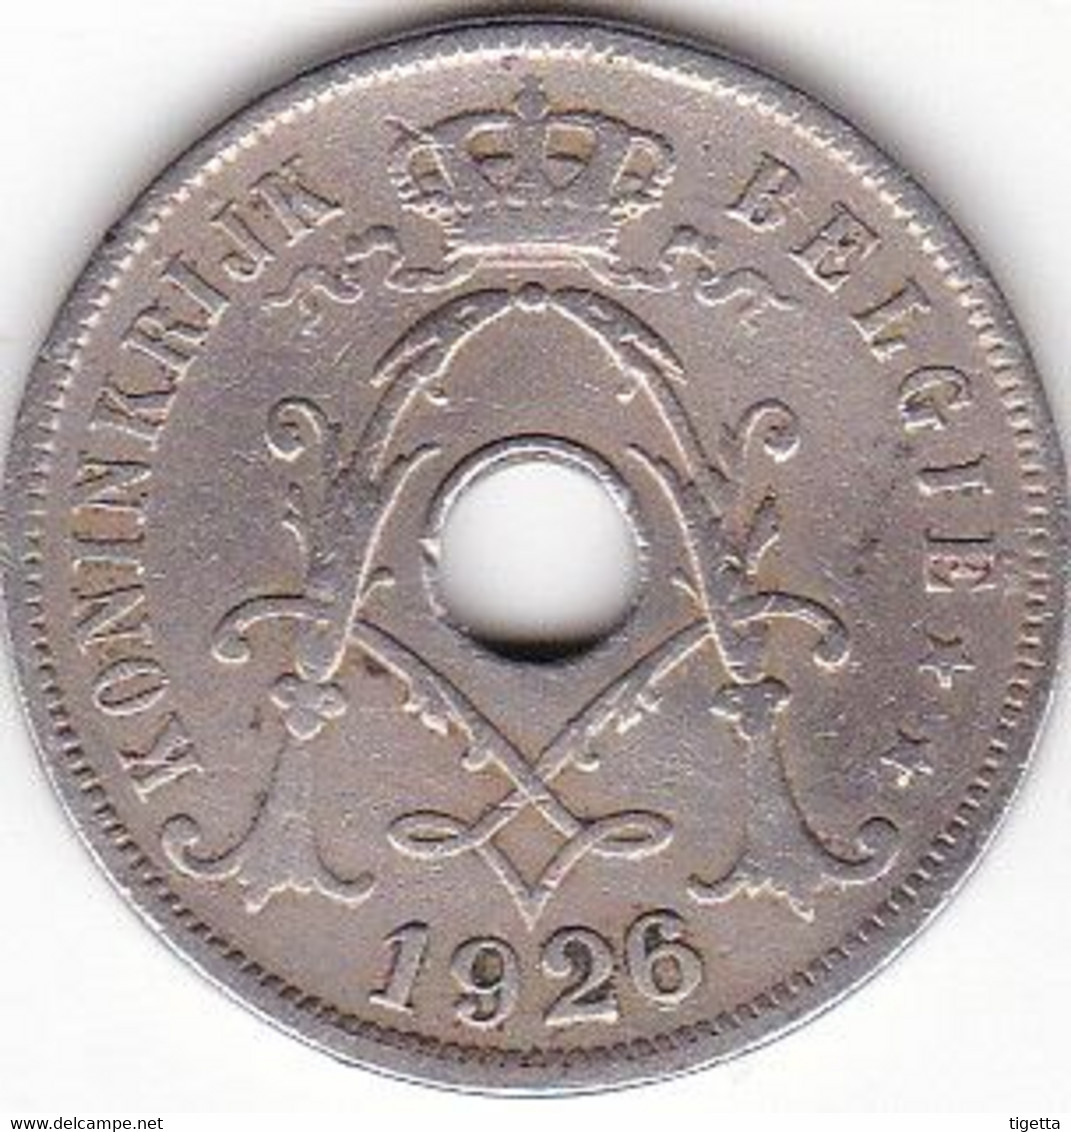 BELGIO 25 CENTS  ANNO 1926 - 25 Cent